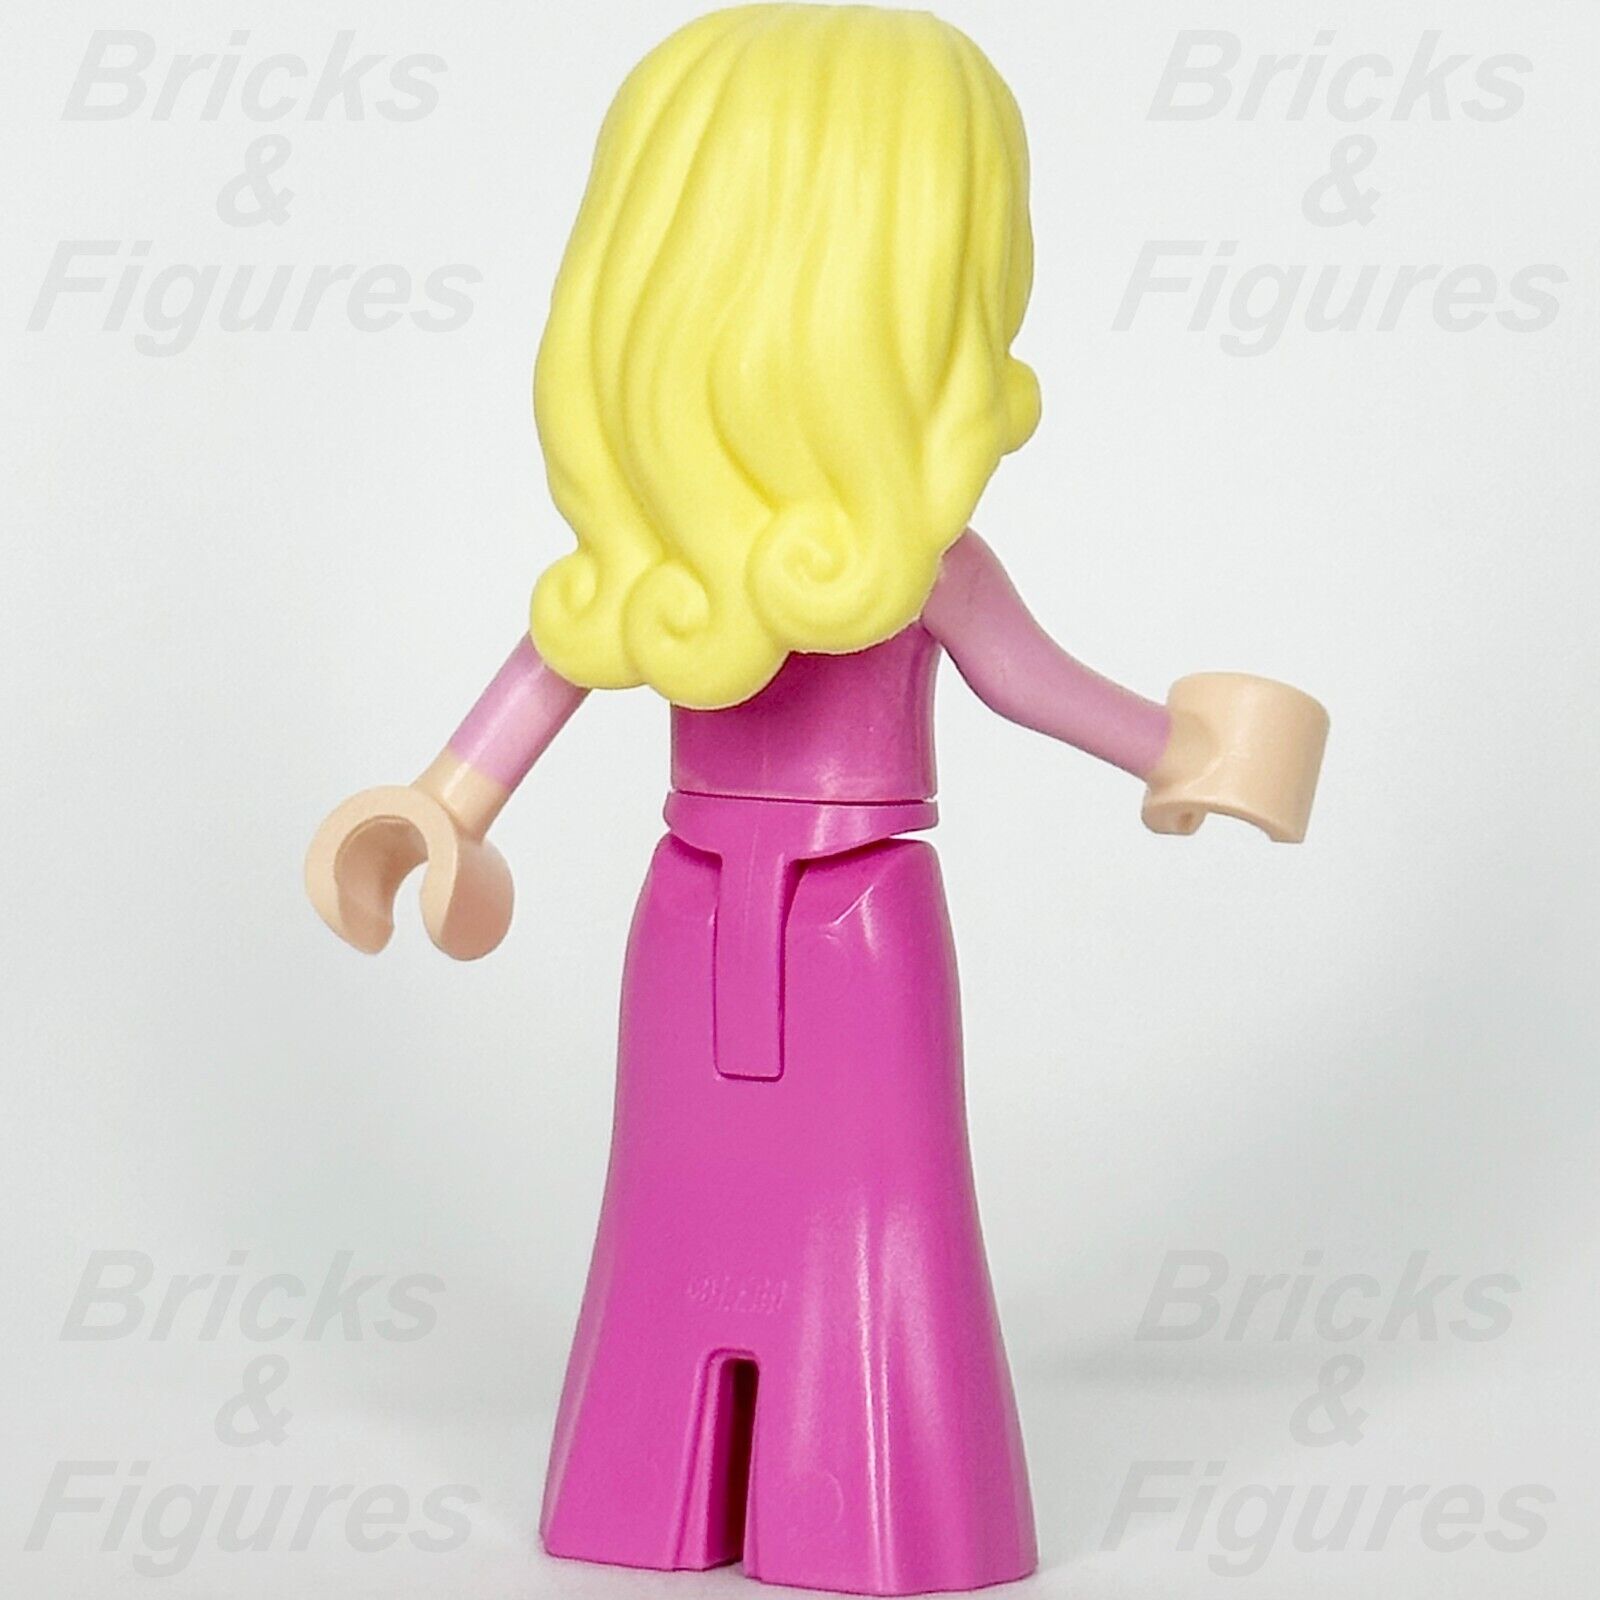 LEGO Disney Princess Aurora Minifigure Sleeping Beauty 43188 dp105 Minifig 3